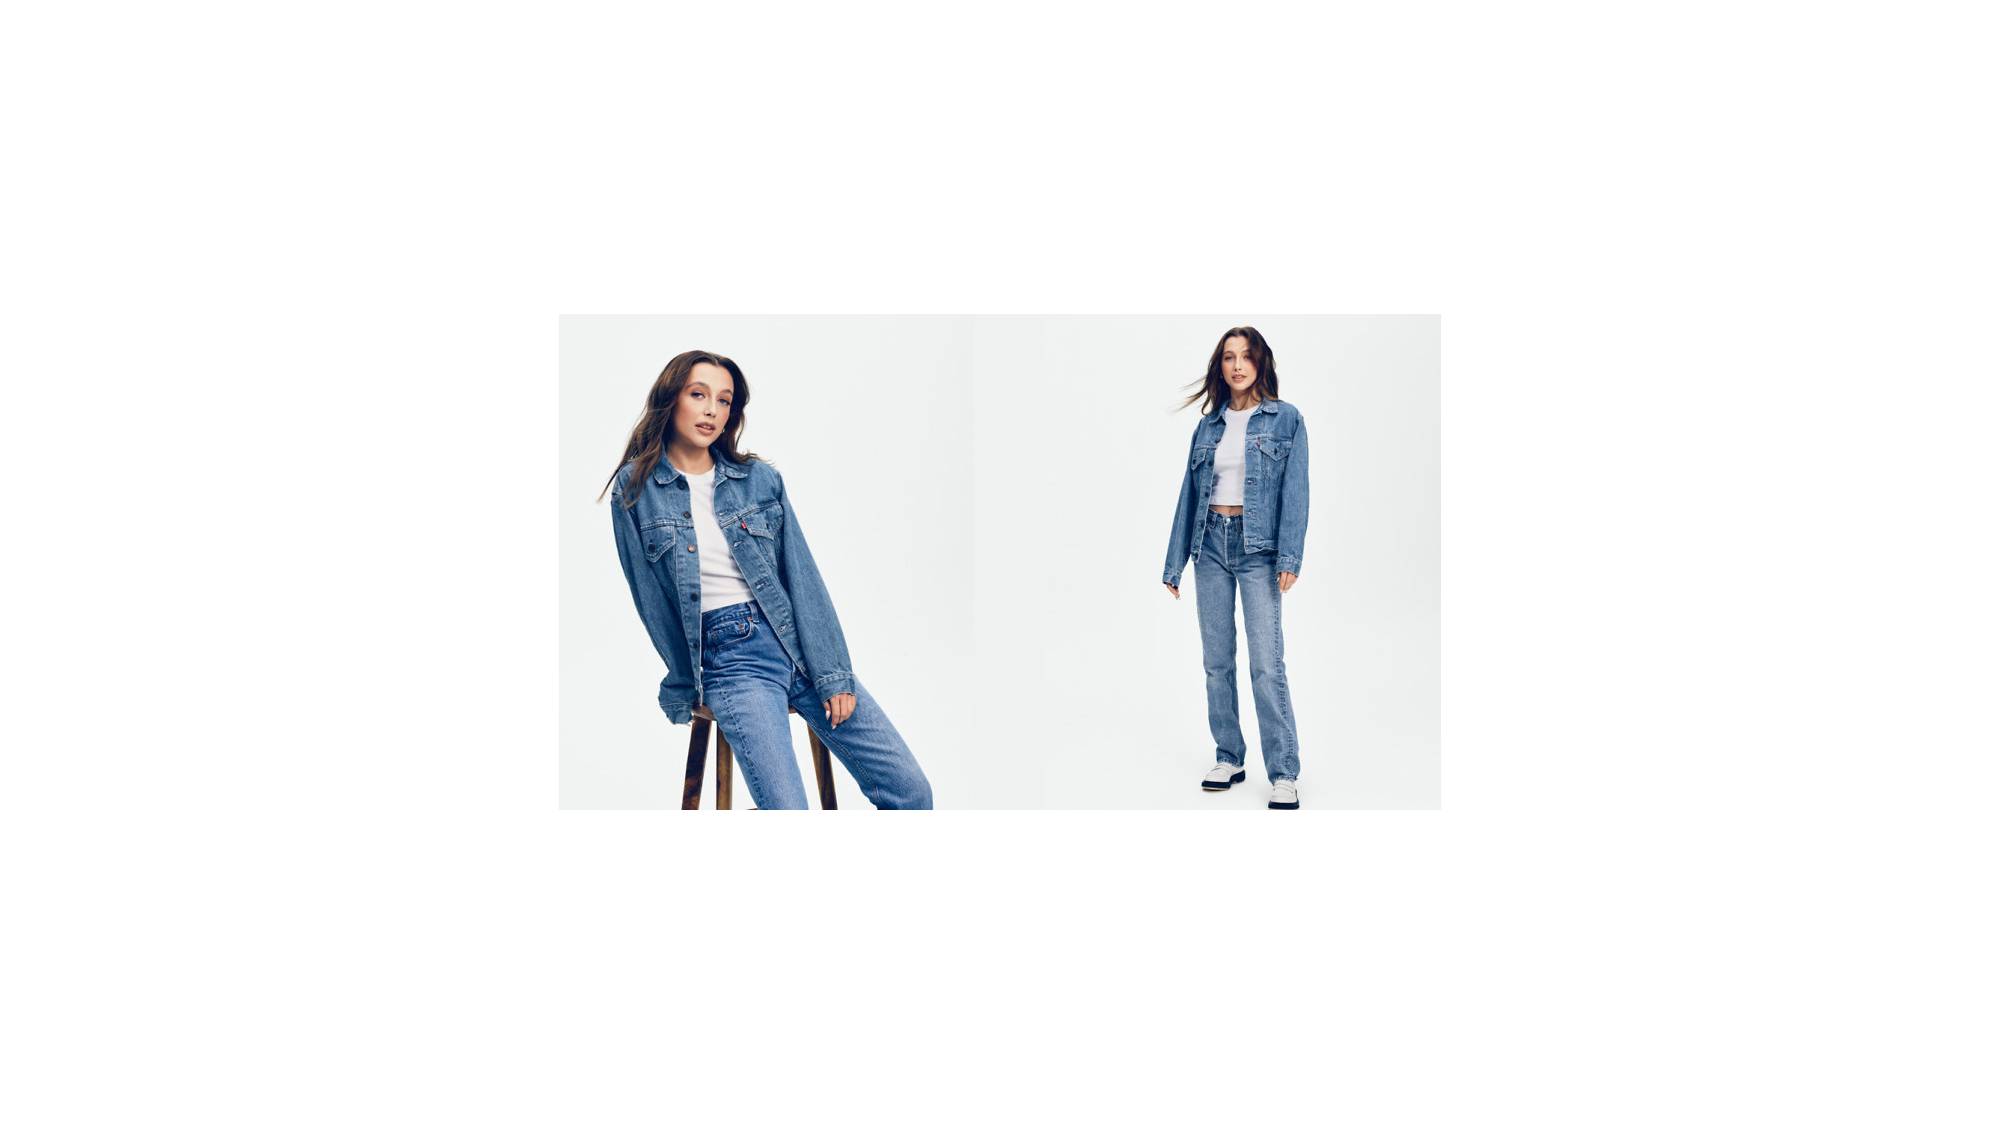 Topshop 'Meet Your New Jeans' Denim Campaign - THE JEANS BLOG